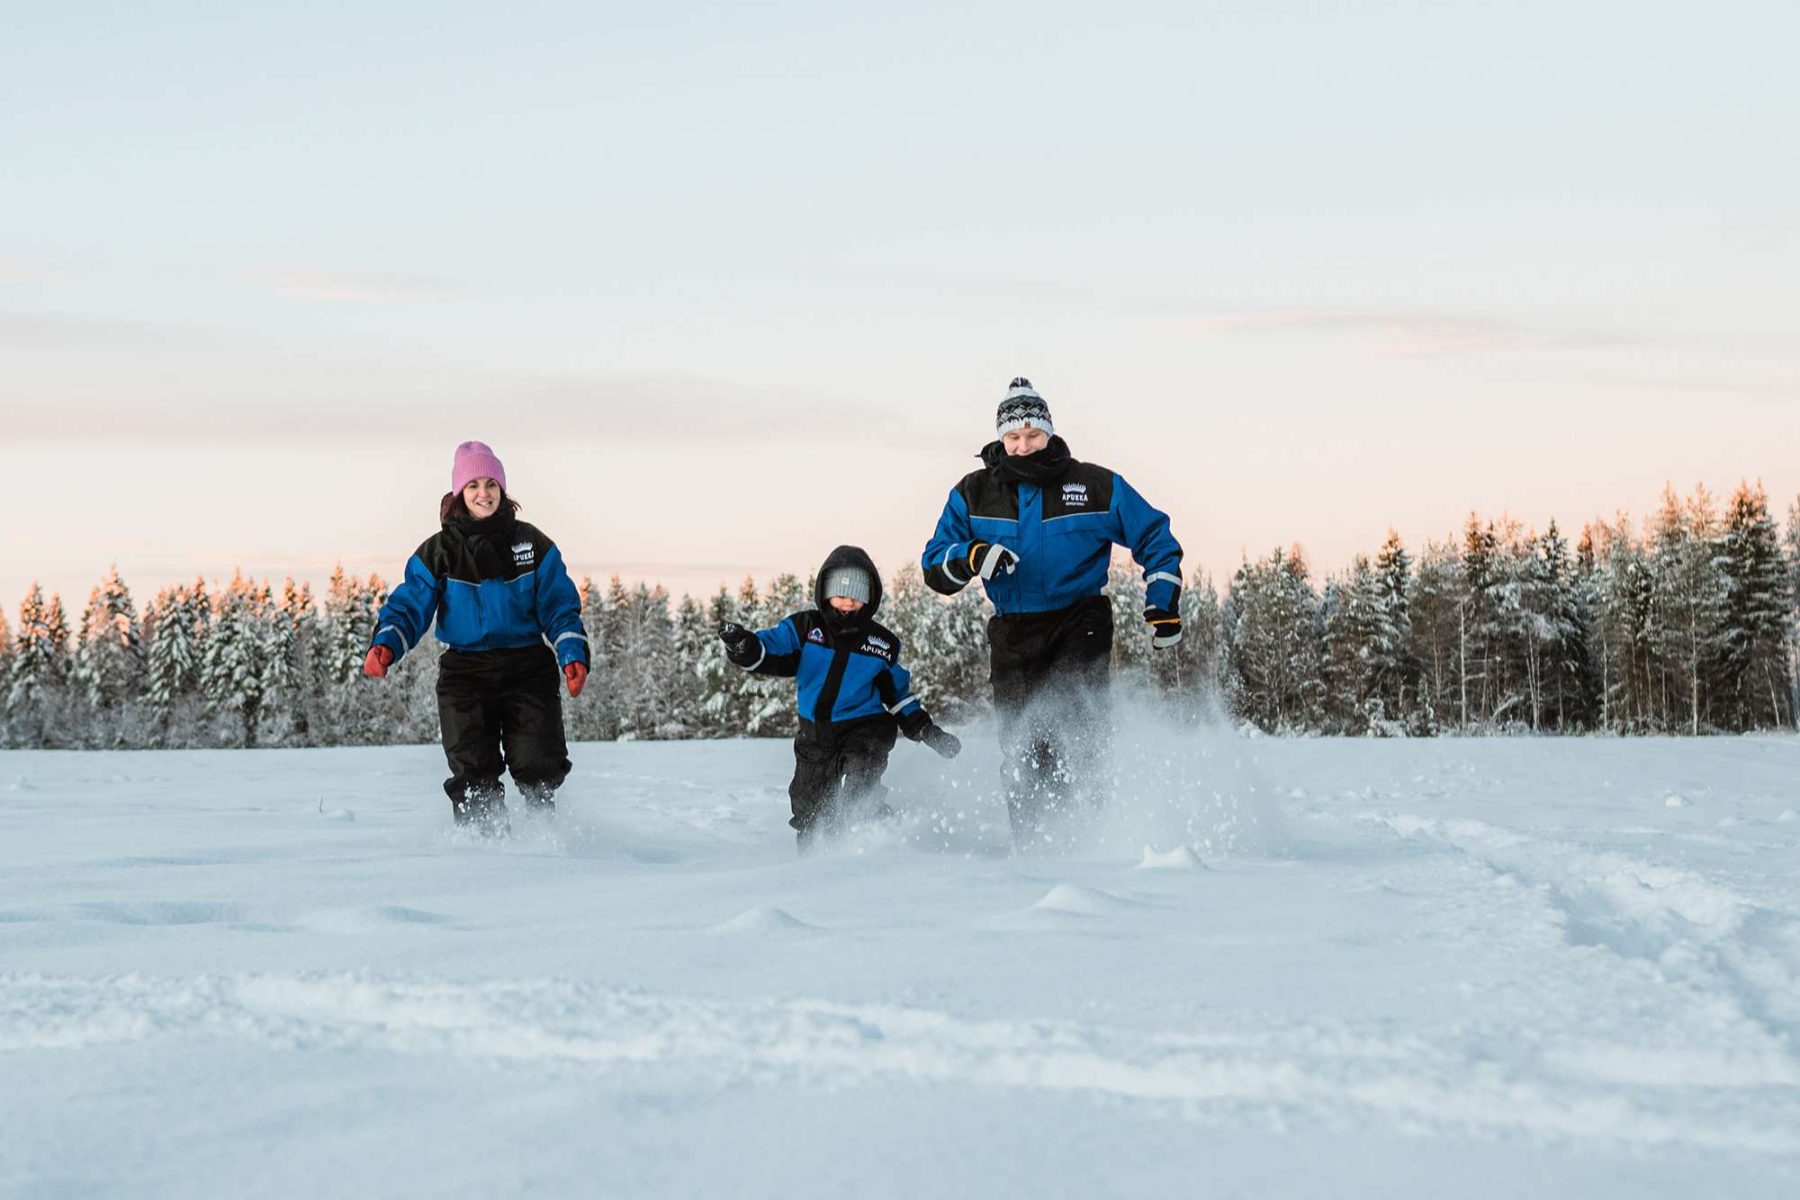 finnish lapland family fun in the snow at apukka